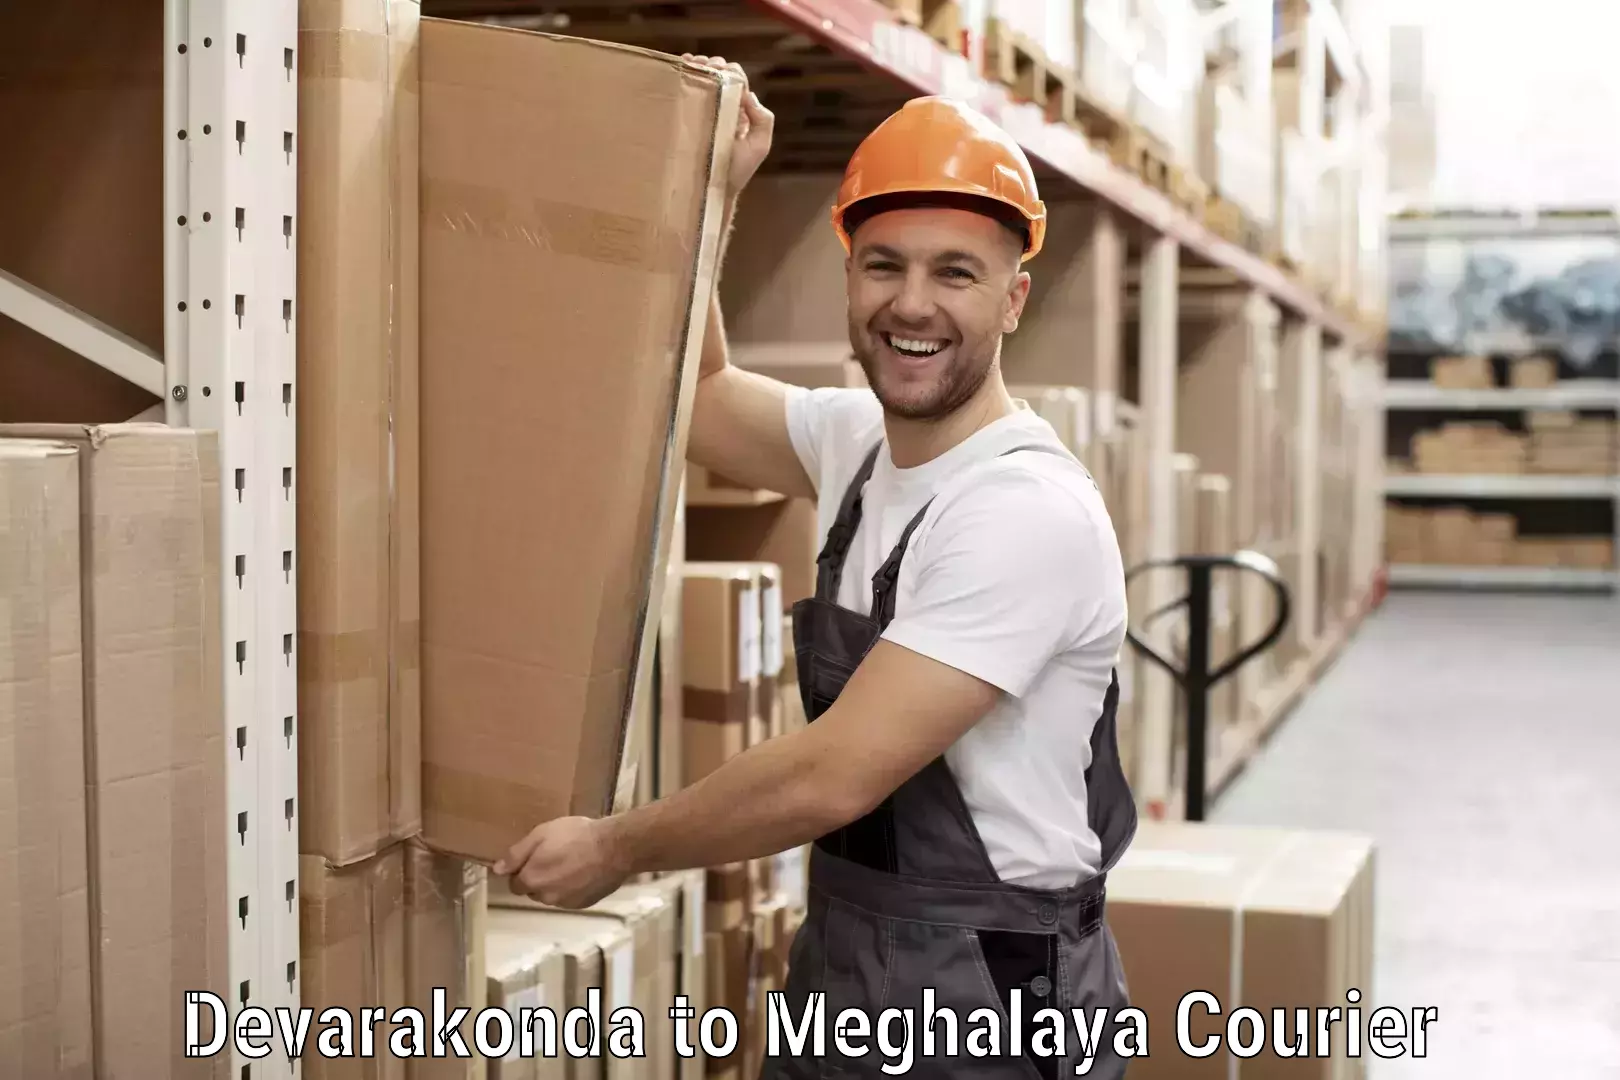 Global courier networks Devarakonda to Meghalaya